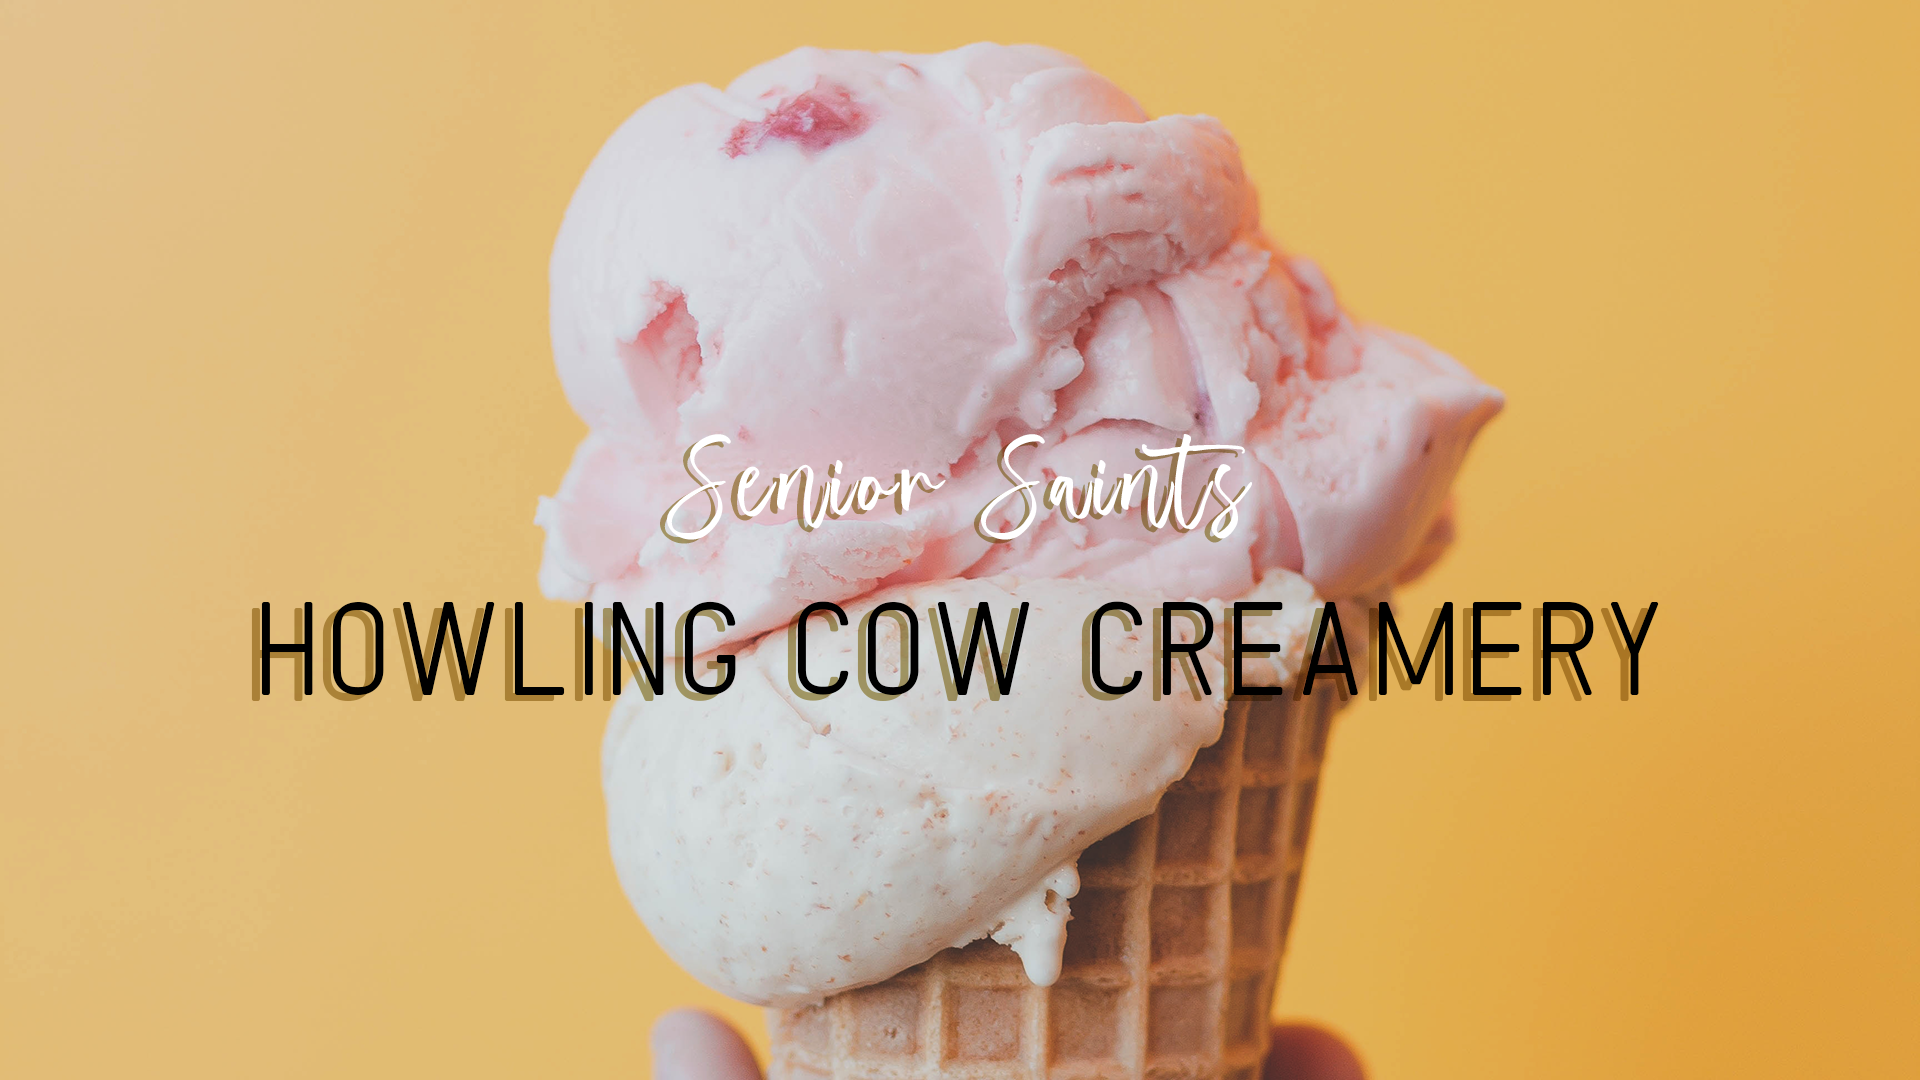 Senior Saints: Howling Cow Creamery